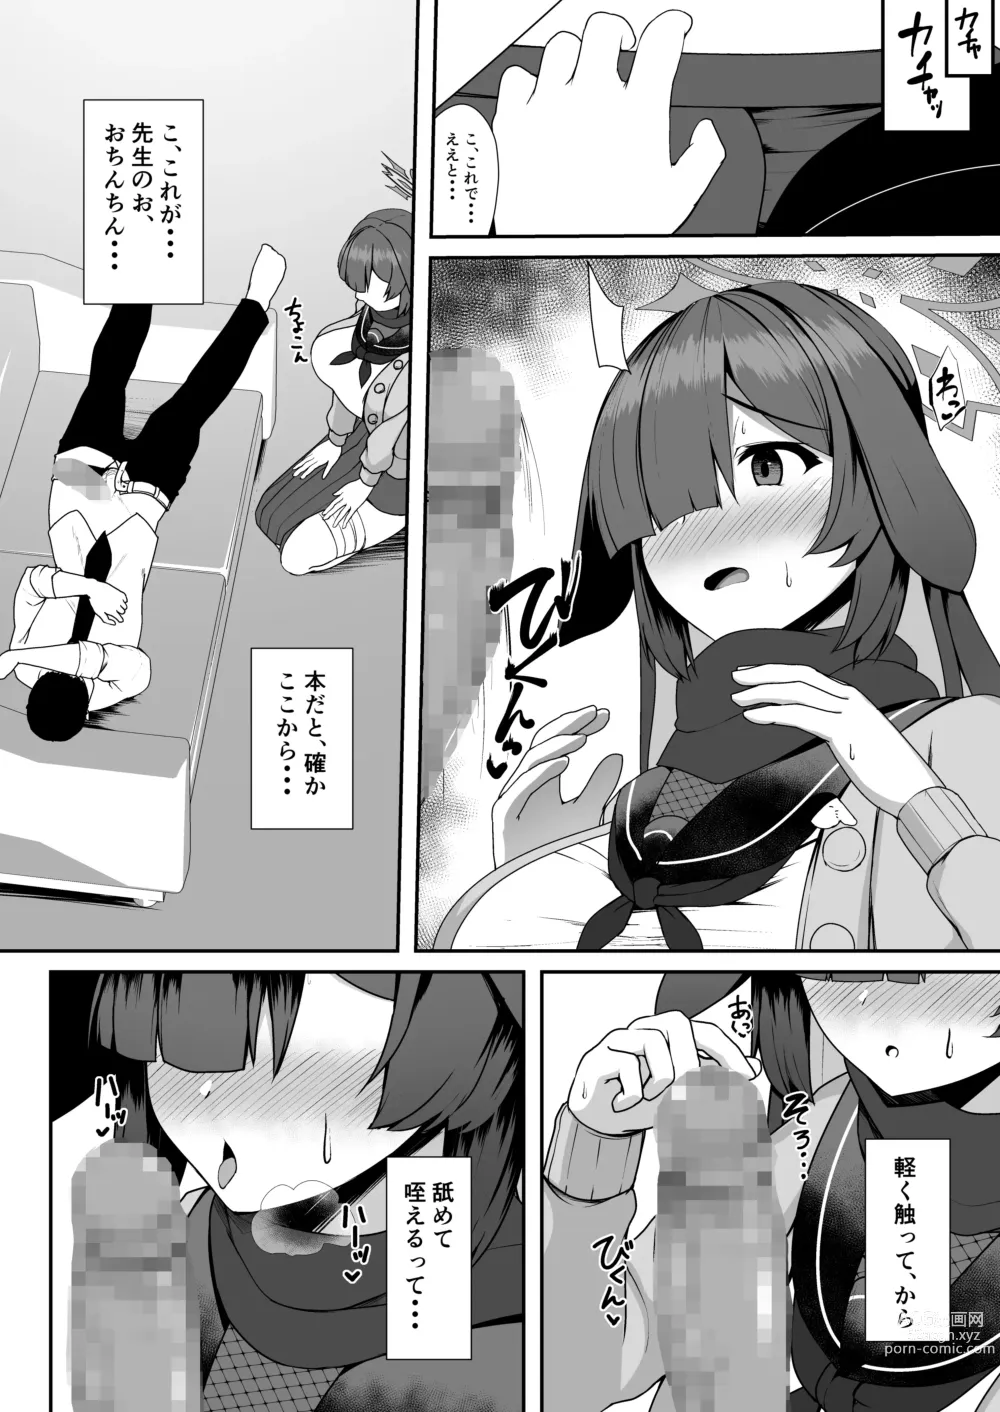 Page 6 of doujinshi Ninjutsu Kenkyu + Omake CG